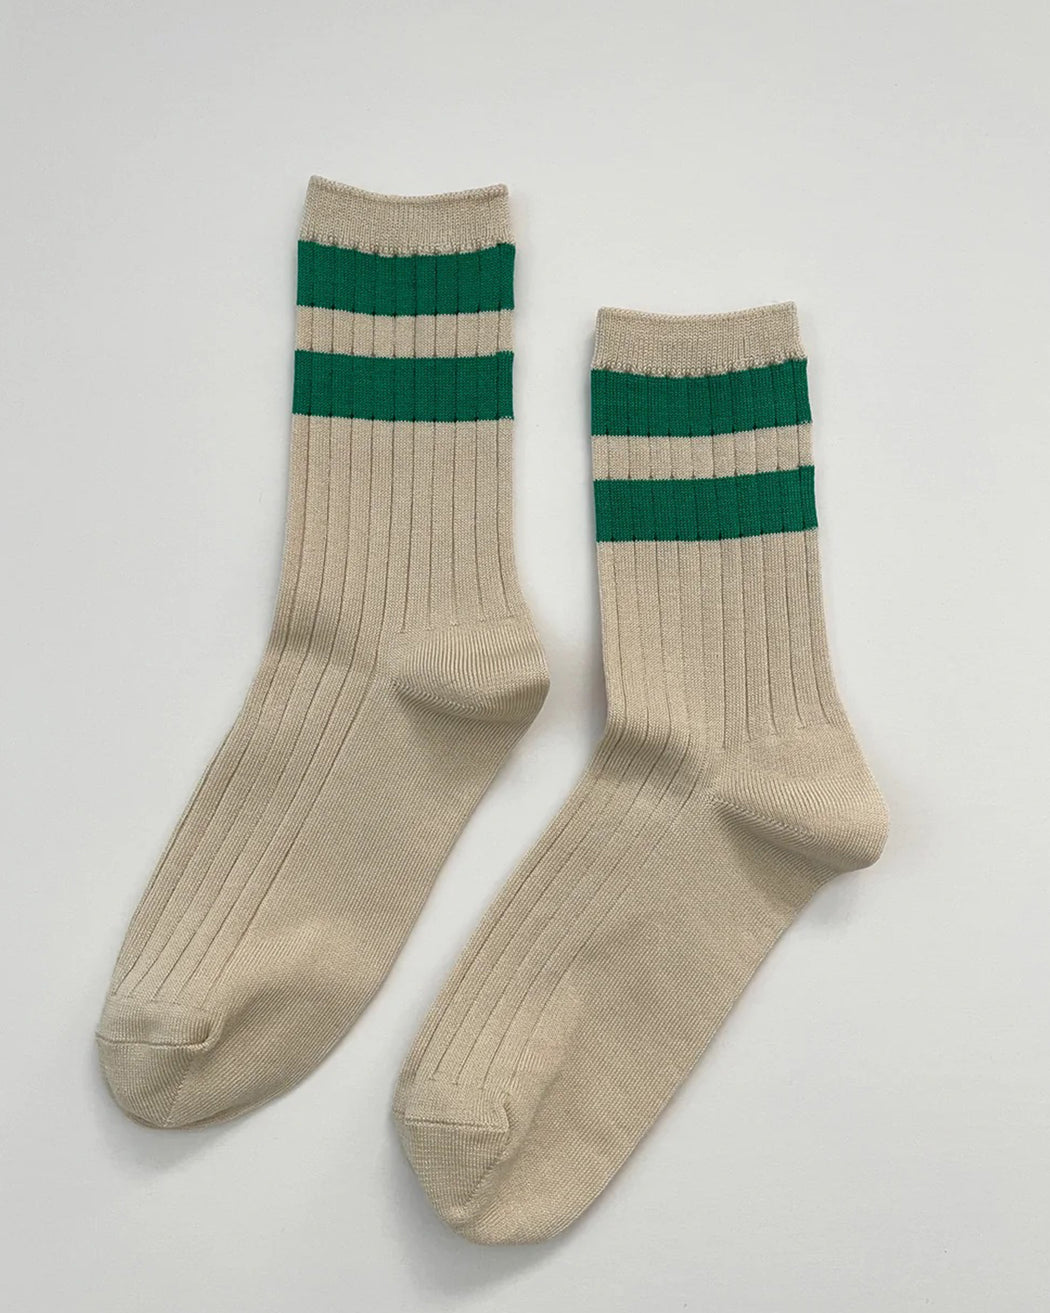 Her Socks – Varsity Green